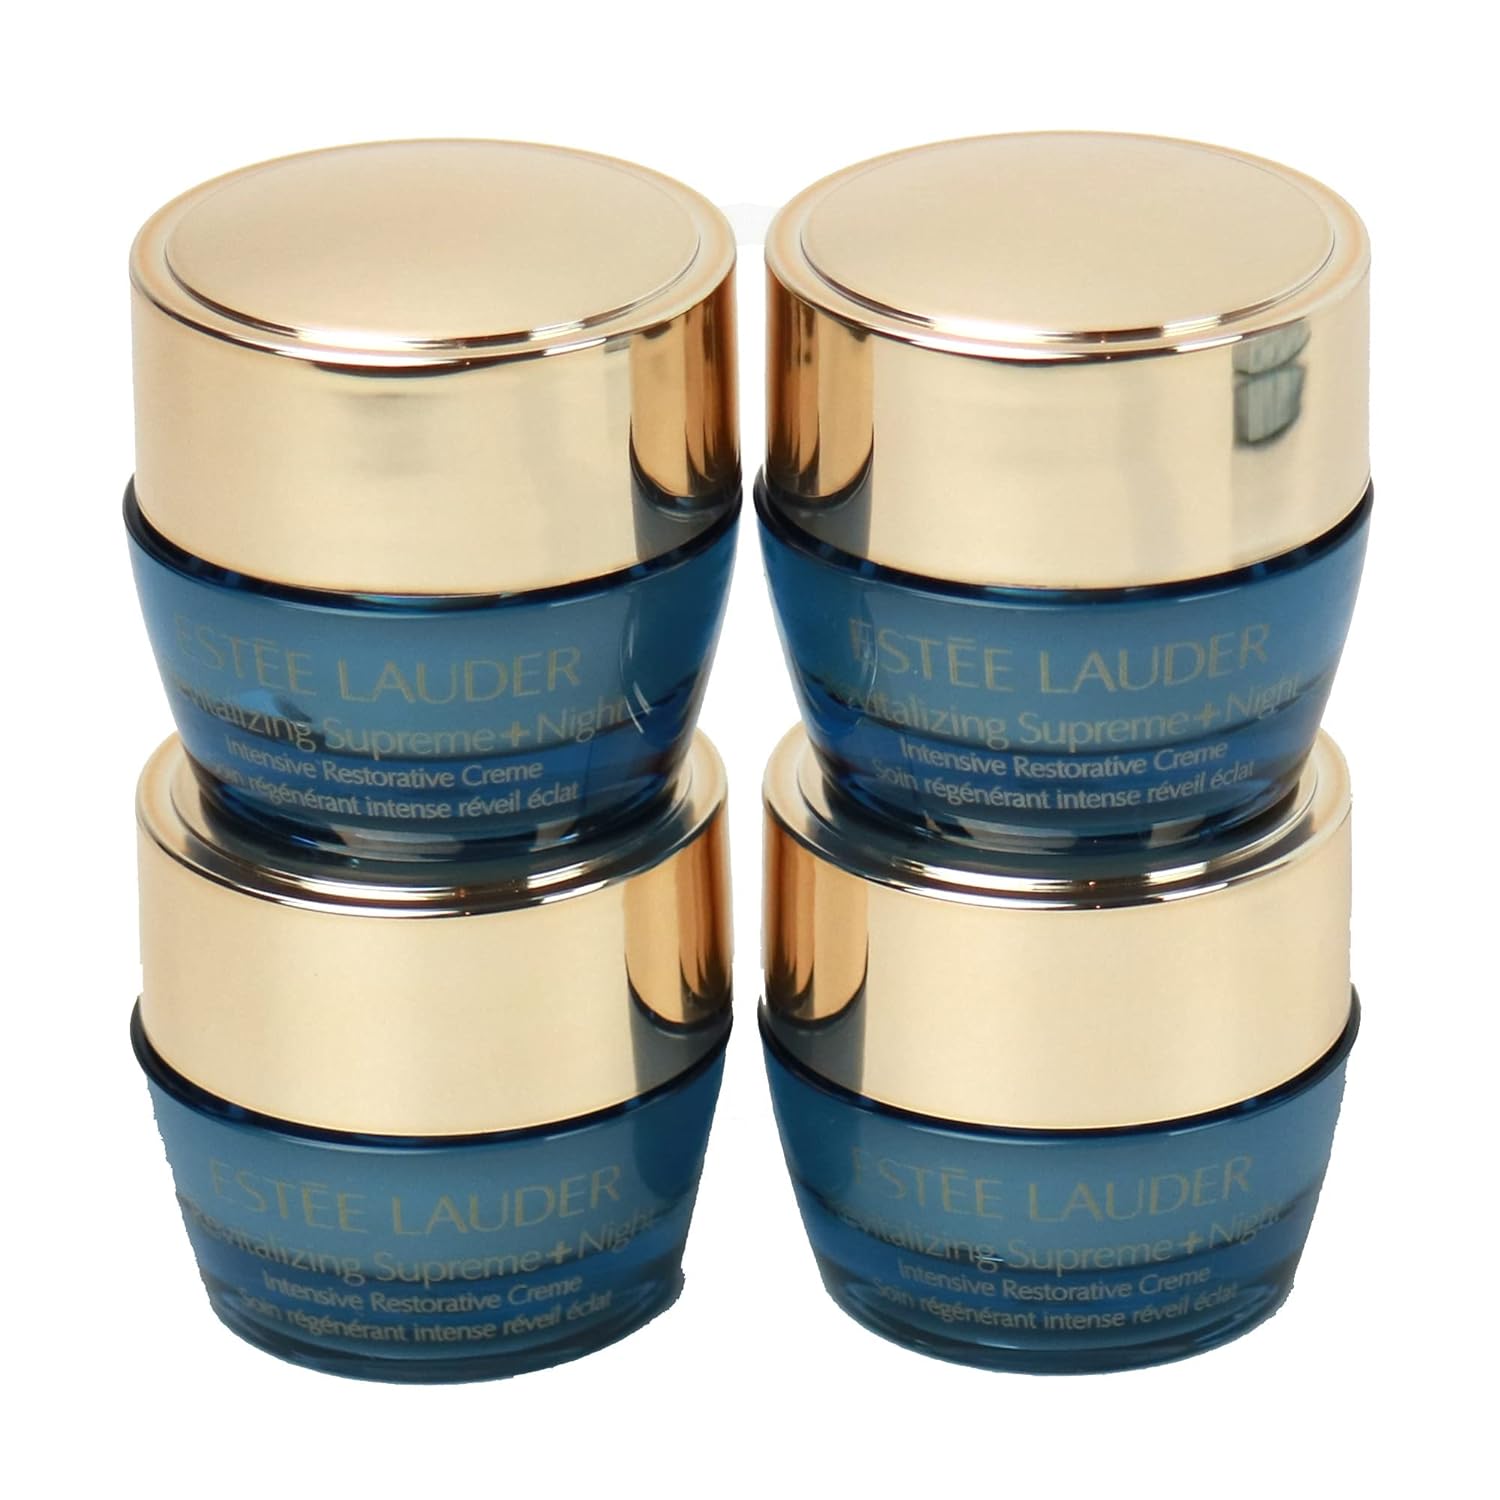 Estee Lauder Pack of 4 x Revitalizing Supreme+ Night Intensive Restorative Creme, 0.24  Each Sample Size Unboxed